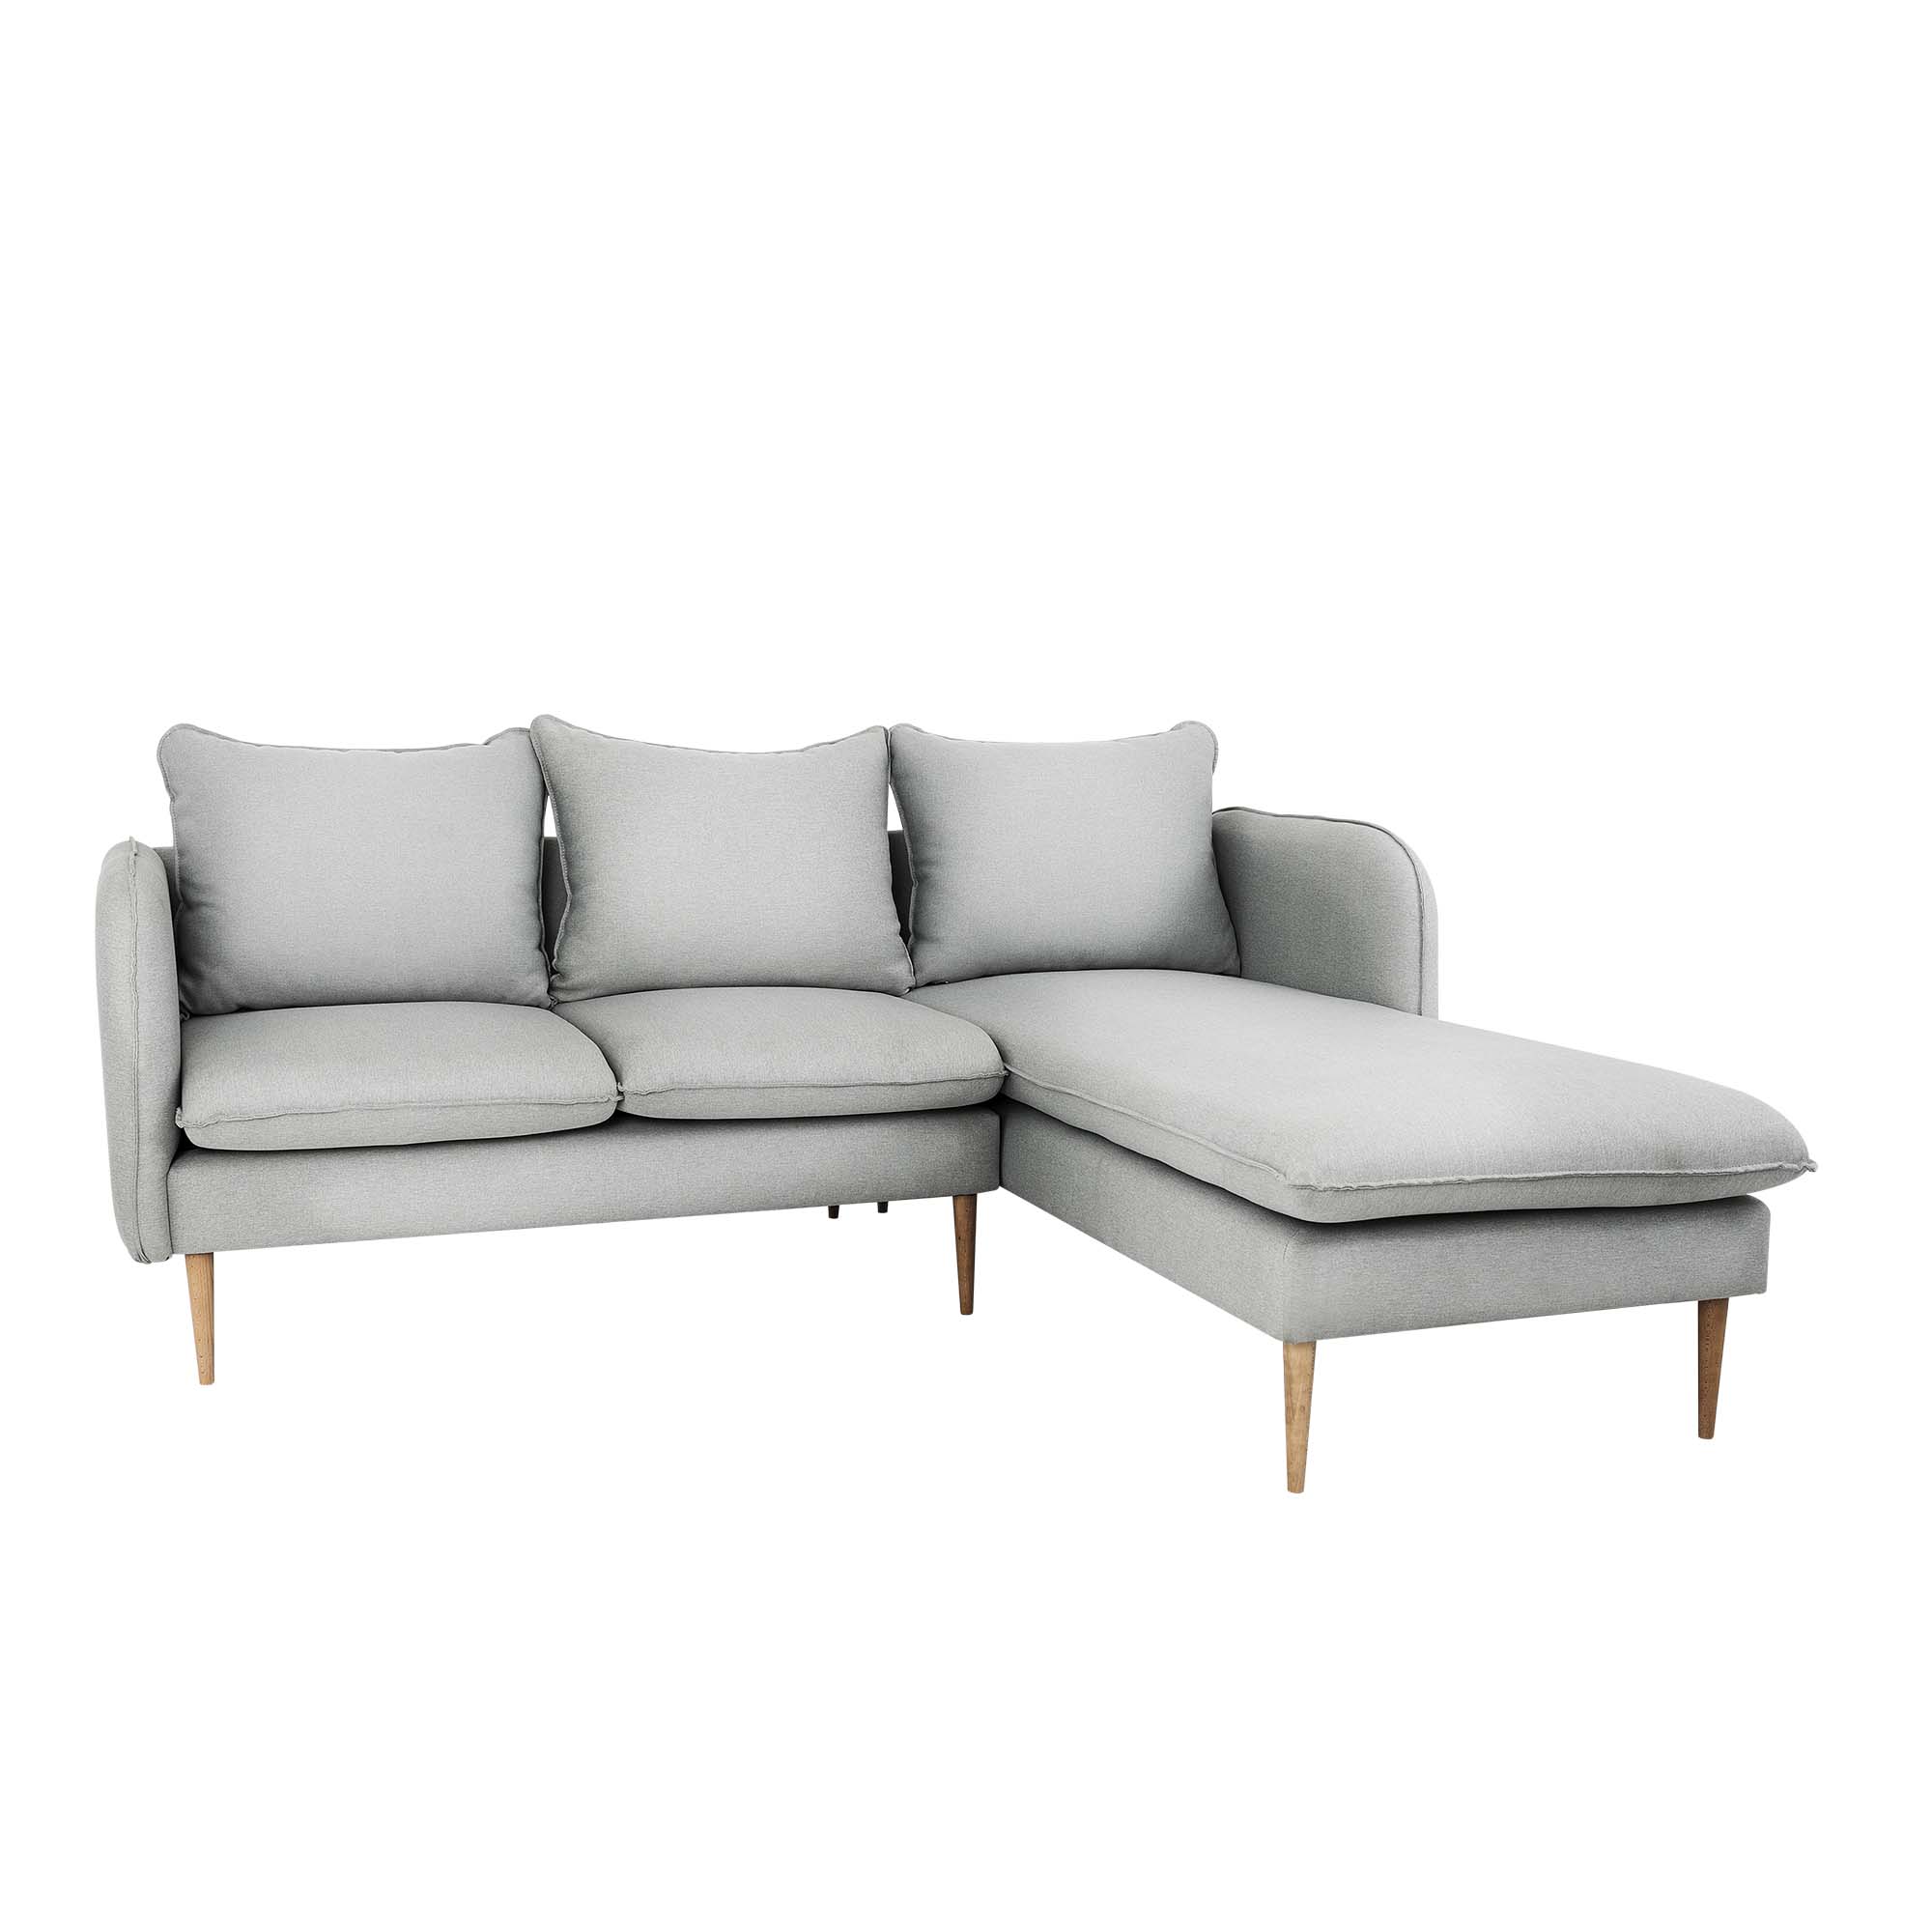 POSH WOOD Corner Sofa Right upholstery colour platinum grey